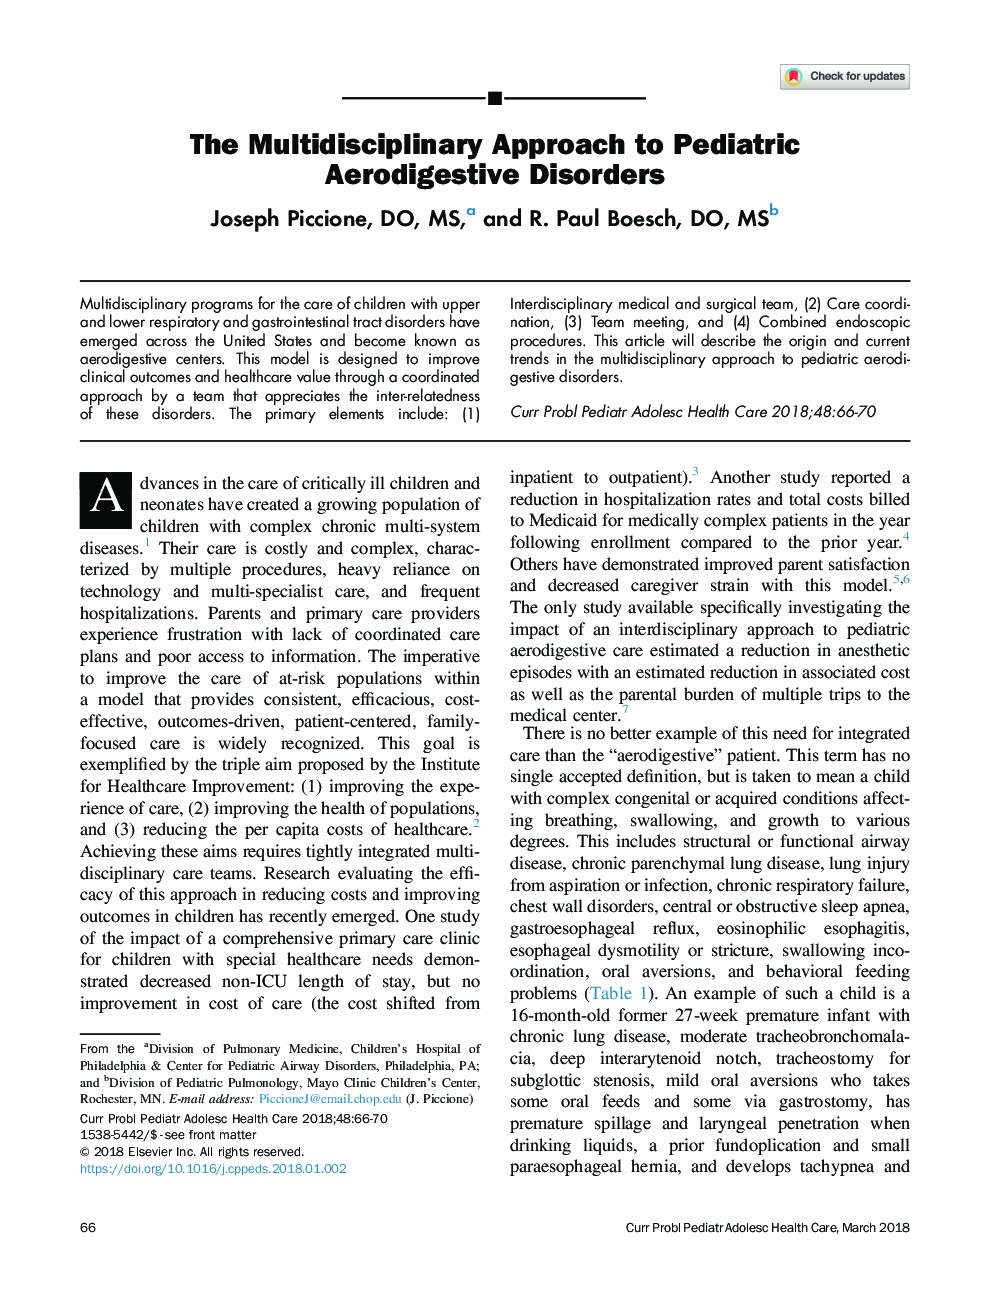 The Multidisciplinary Approach to Pediatric Aerodigestive Disorders